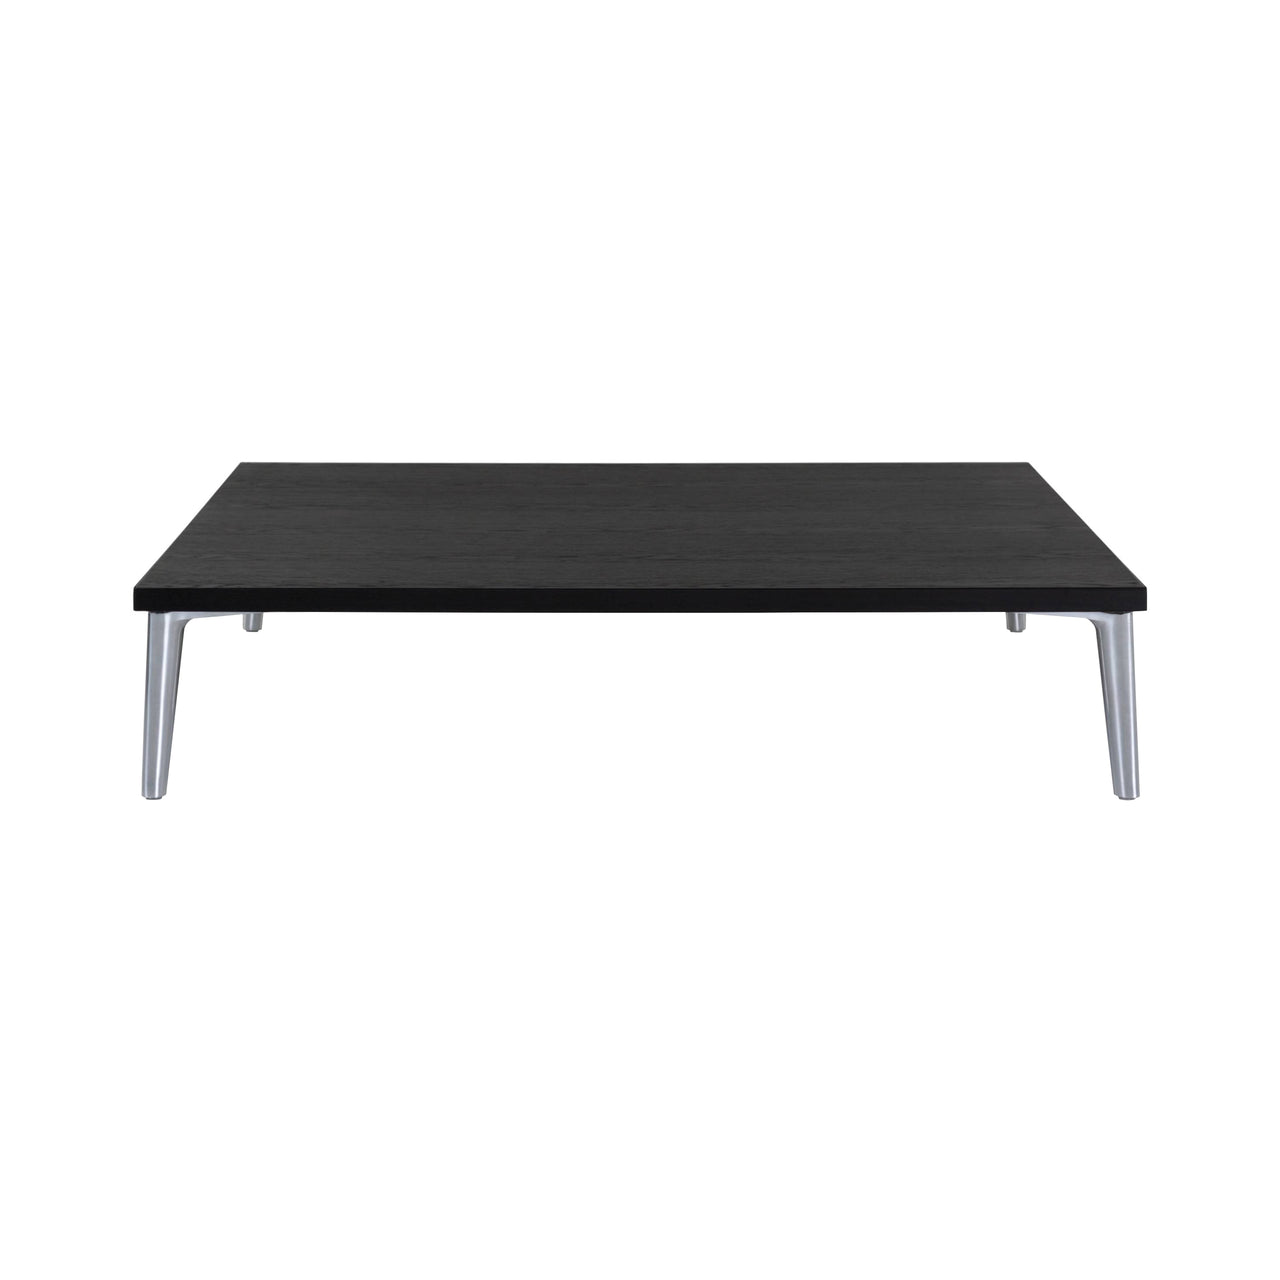 Sofa So Good Table: Black